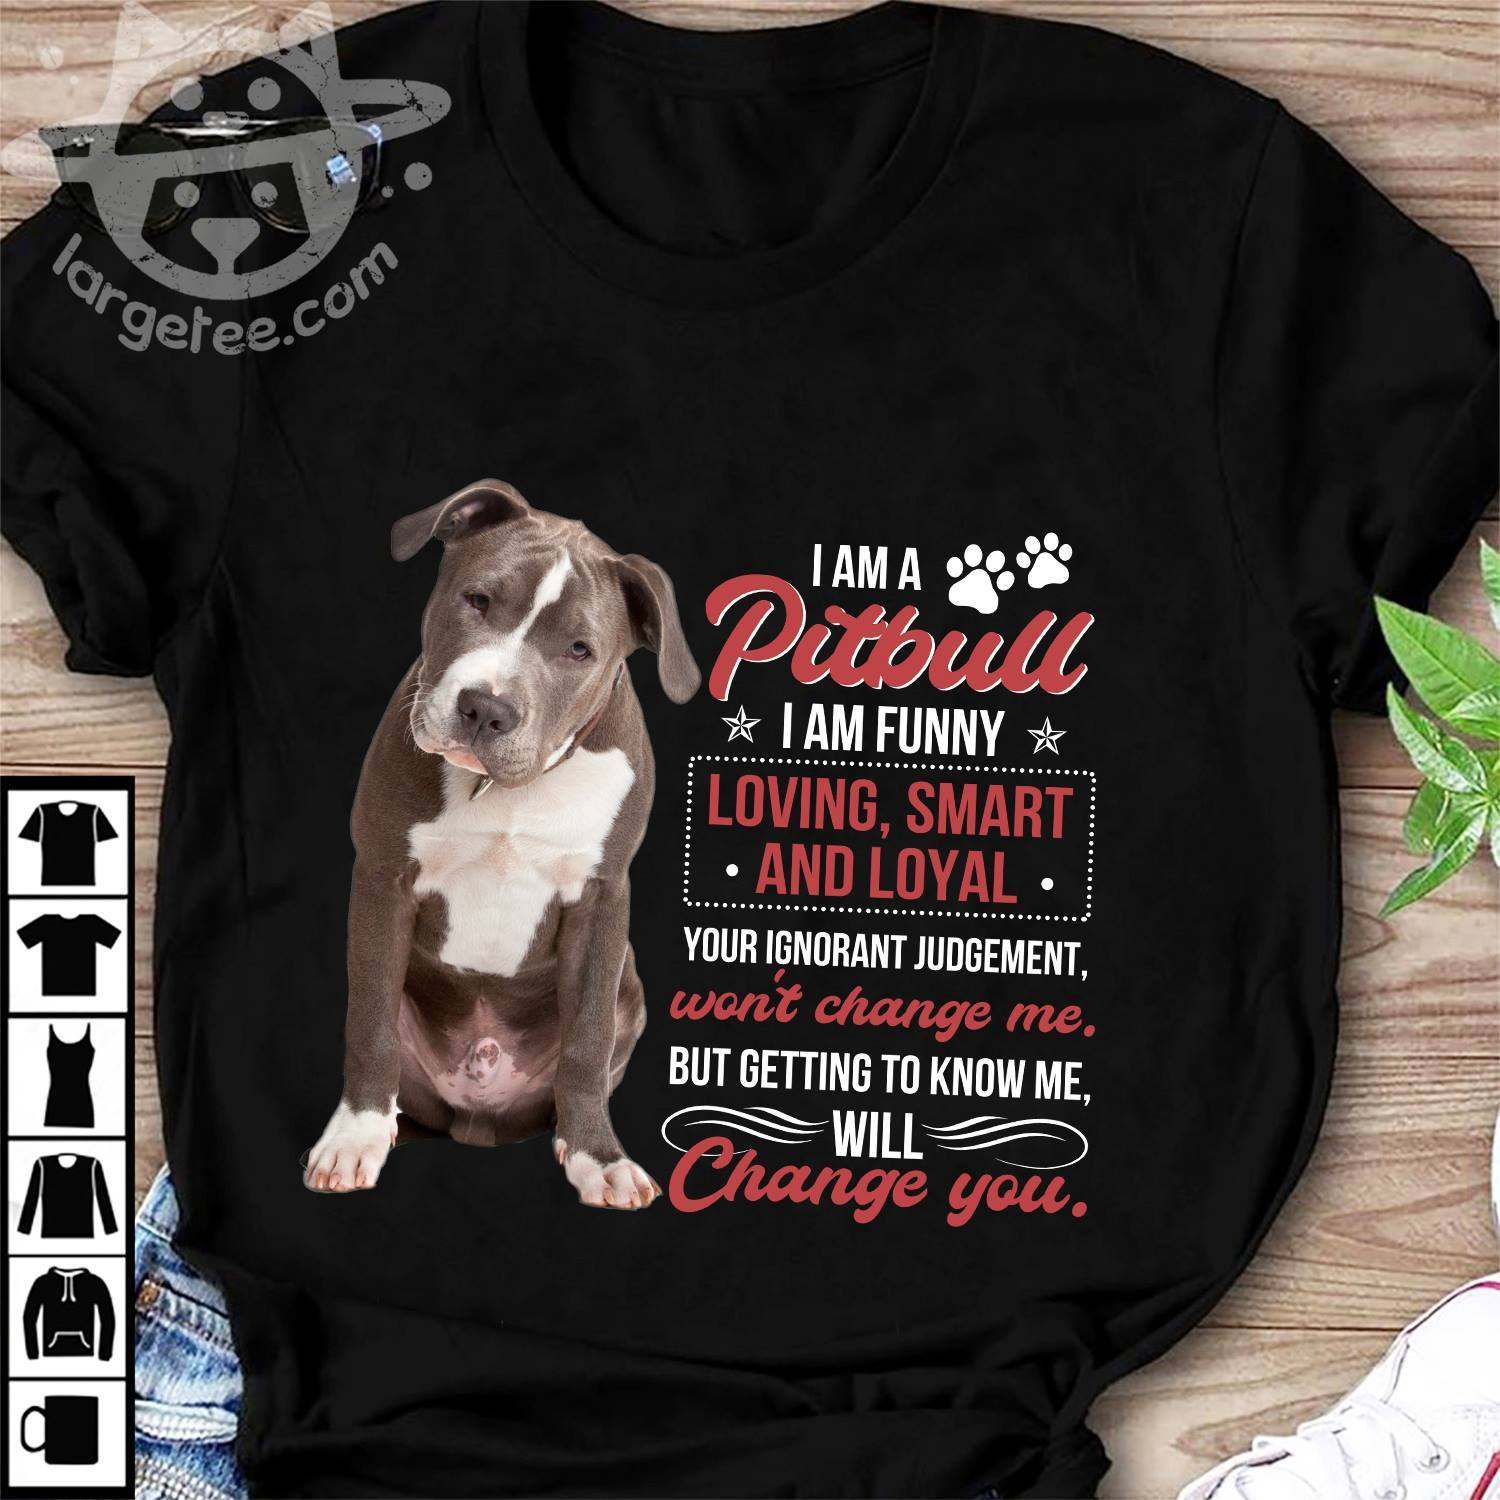 I am a pitbull I am funny loving, smart and loyal - Pitbull dog